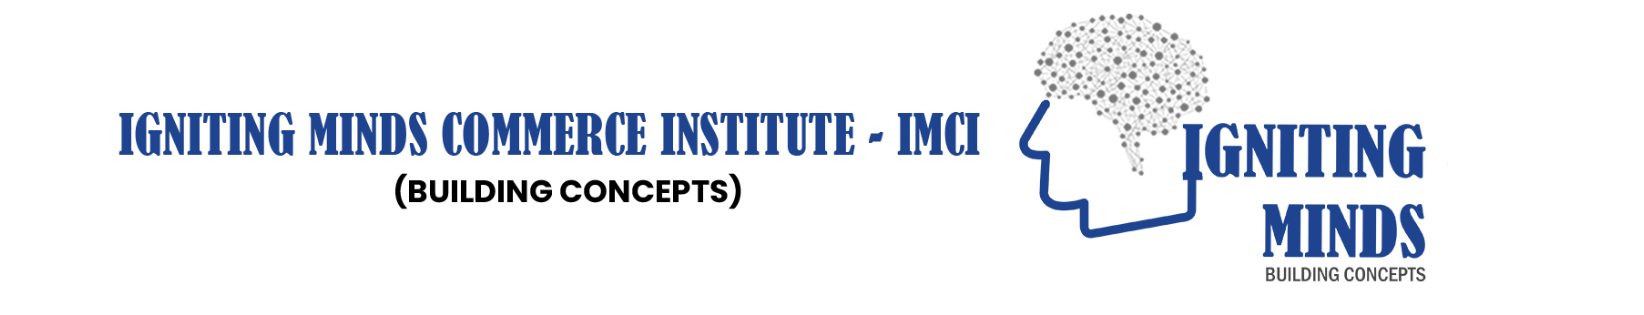 IMCI Logo